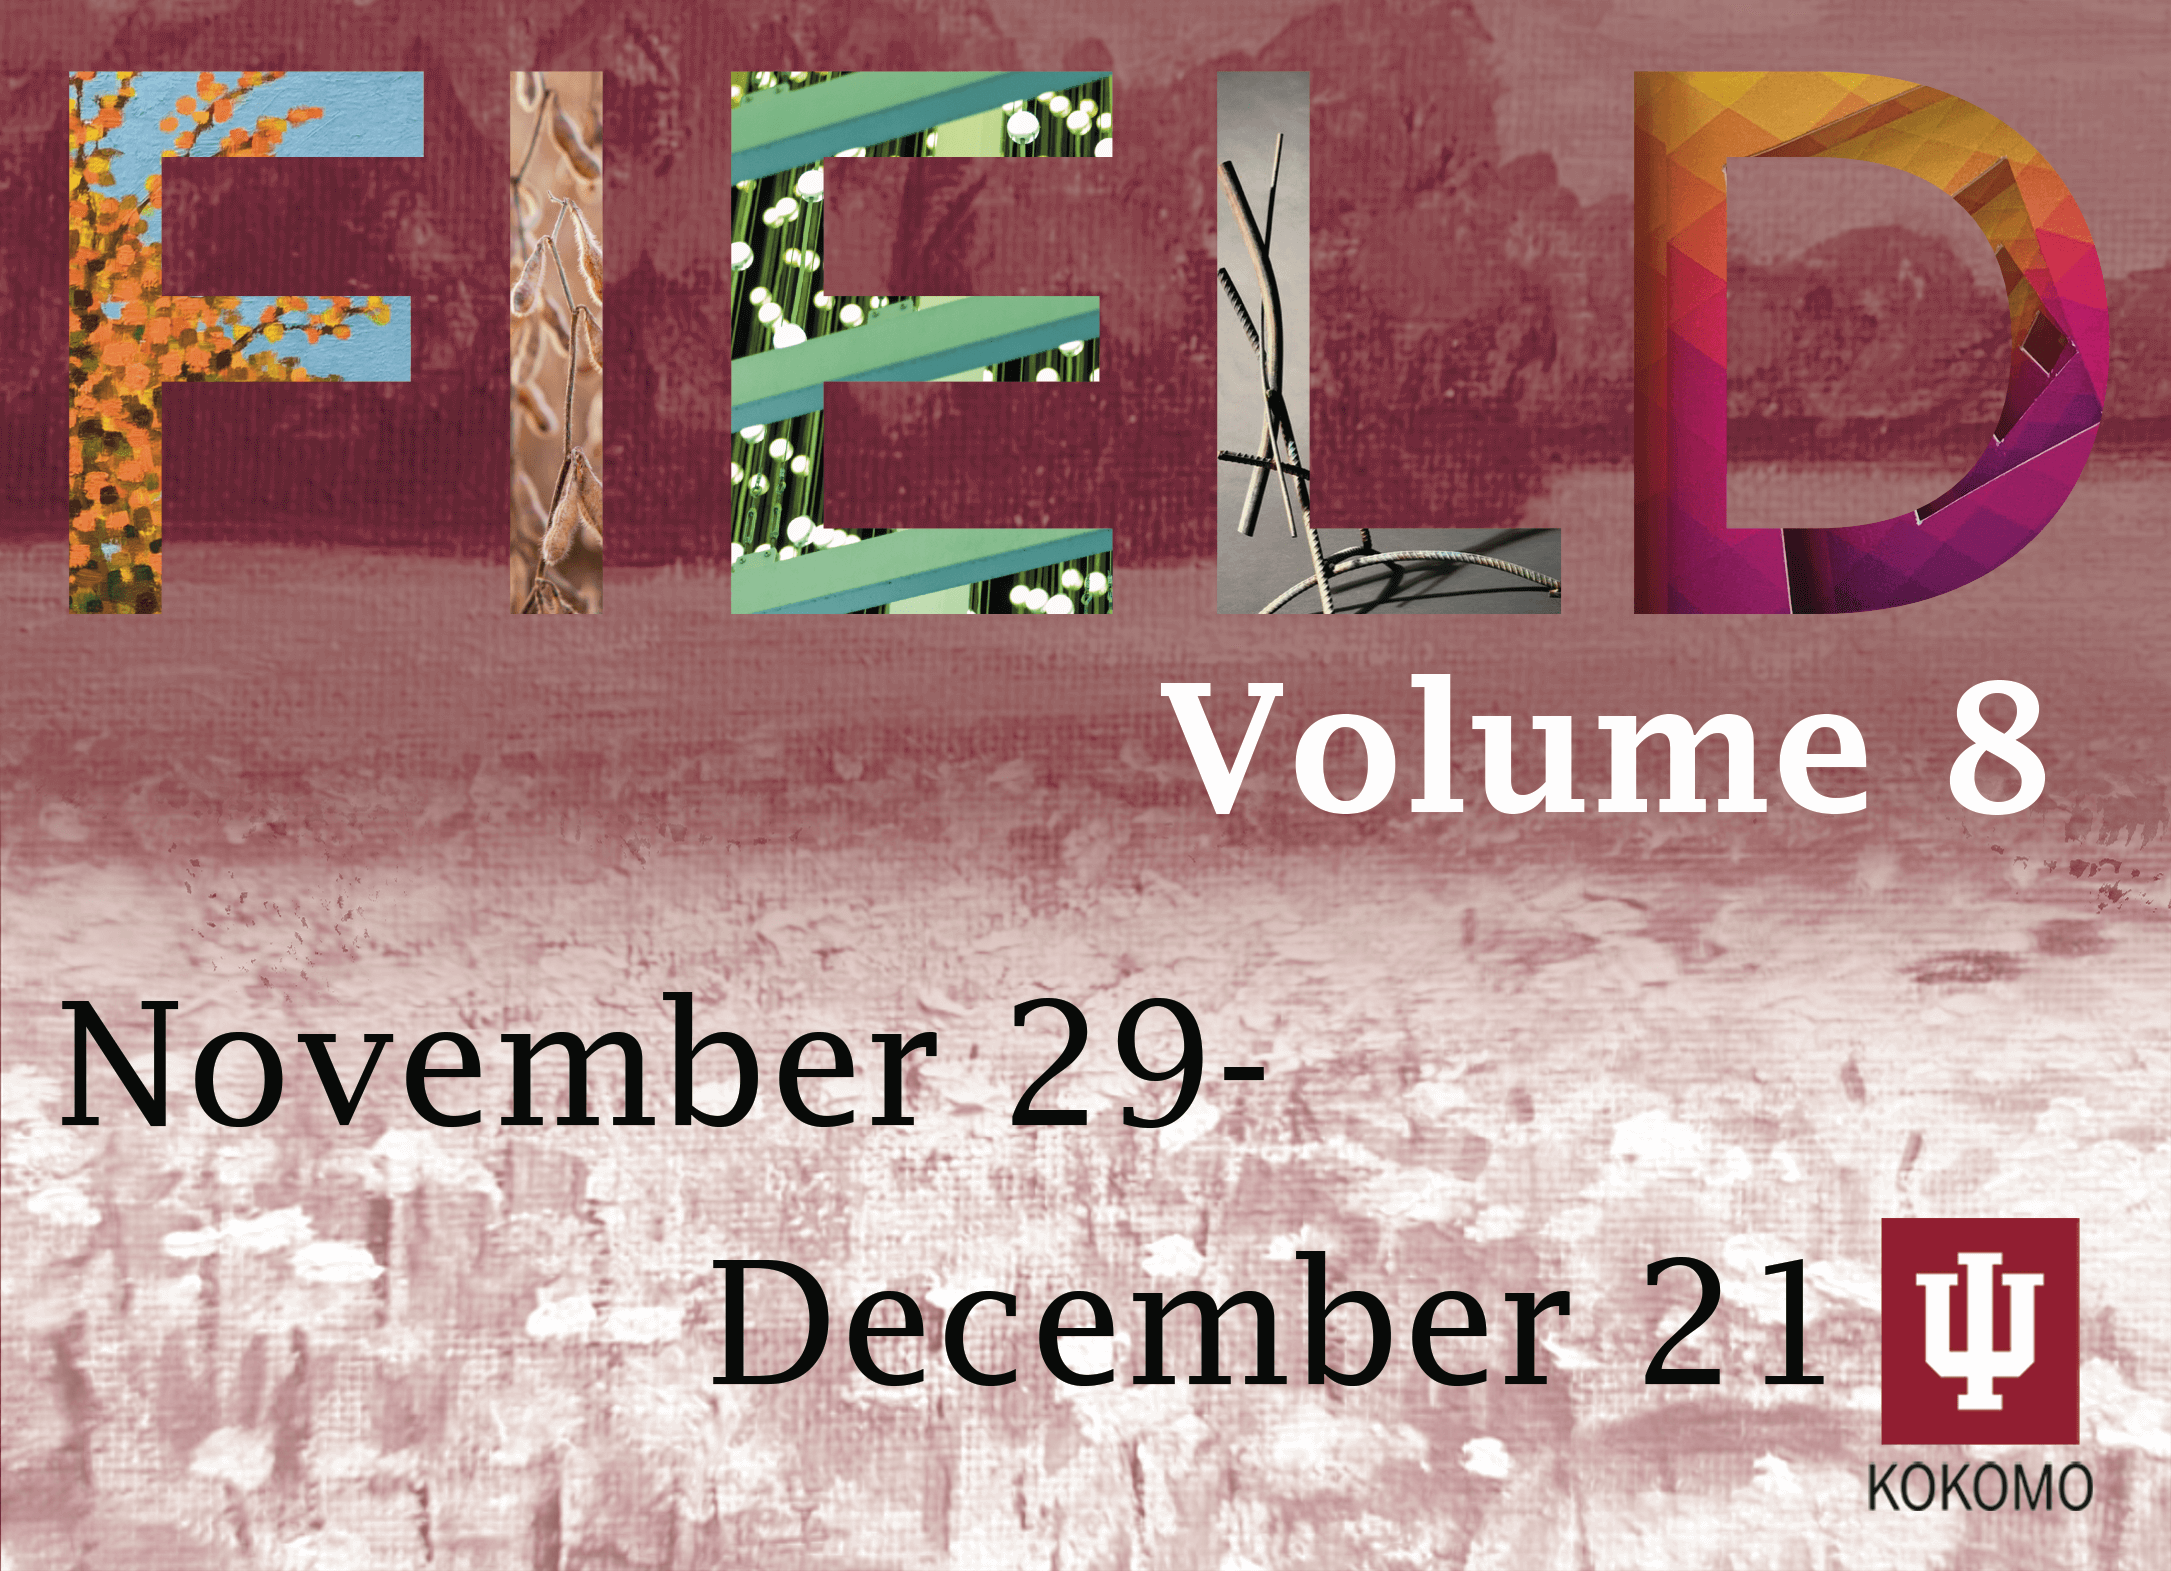 Field Exhibit Volume 8 held on November 29 to December 21.